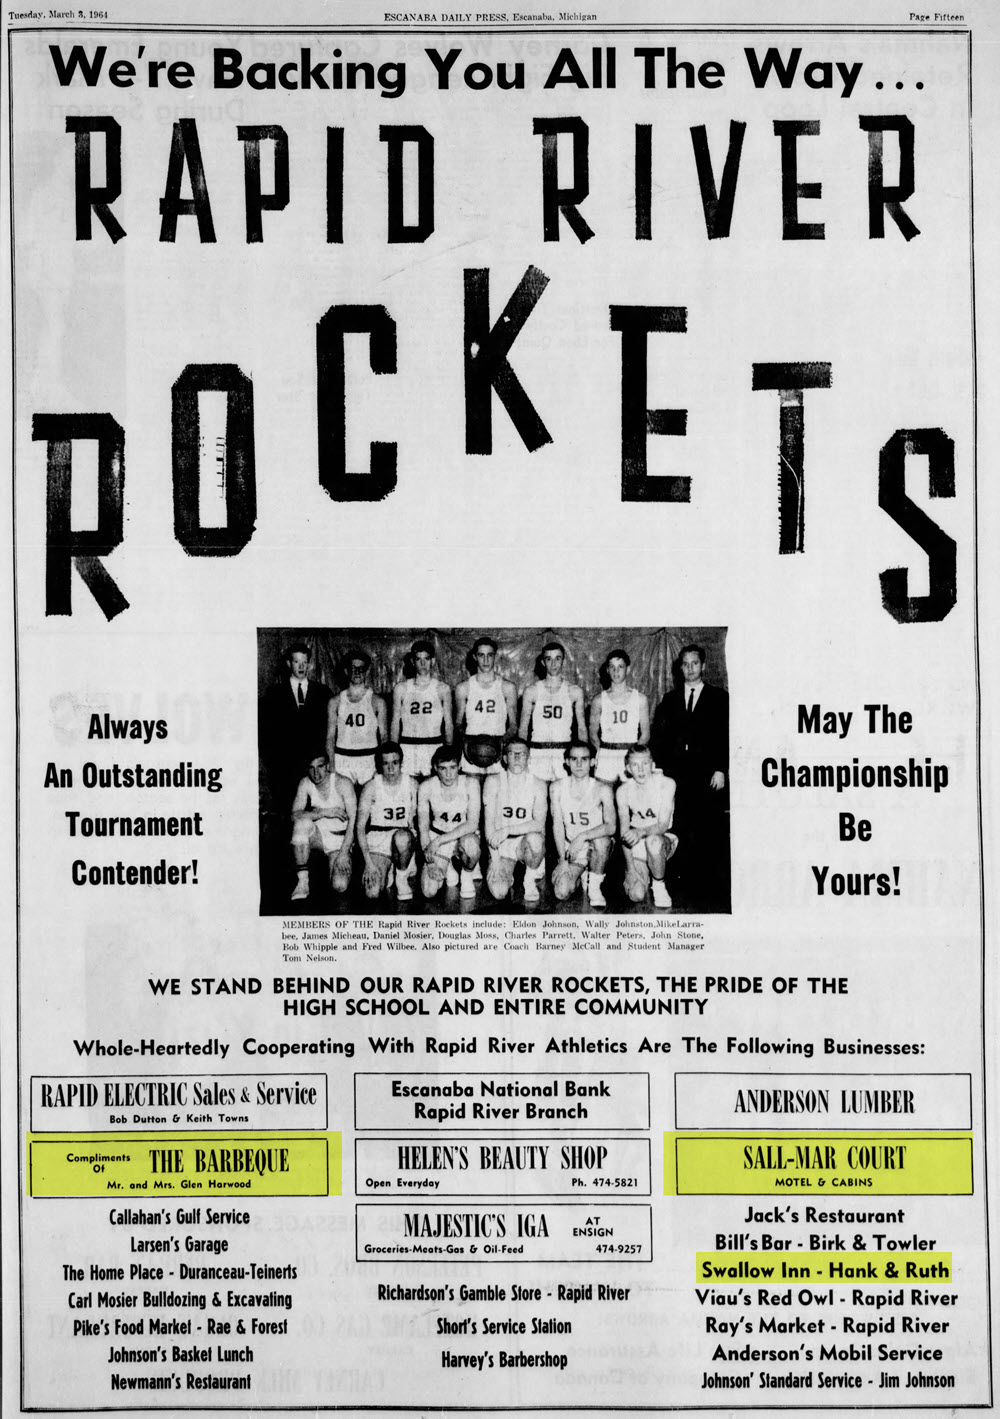 Sall-Mar Resort (Sal-Mar Court) - Mar 3 1964 Ad For Rapid City Rockets